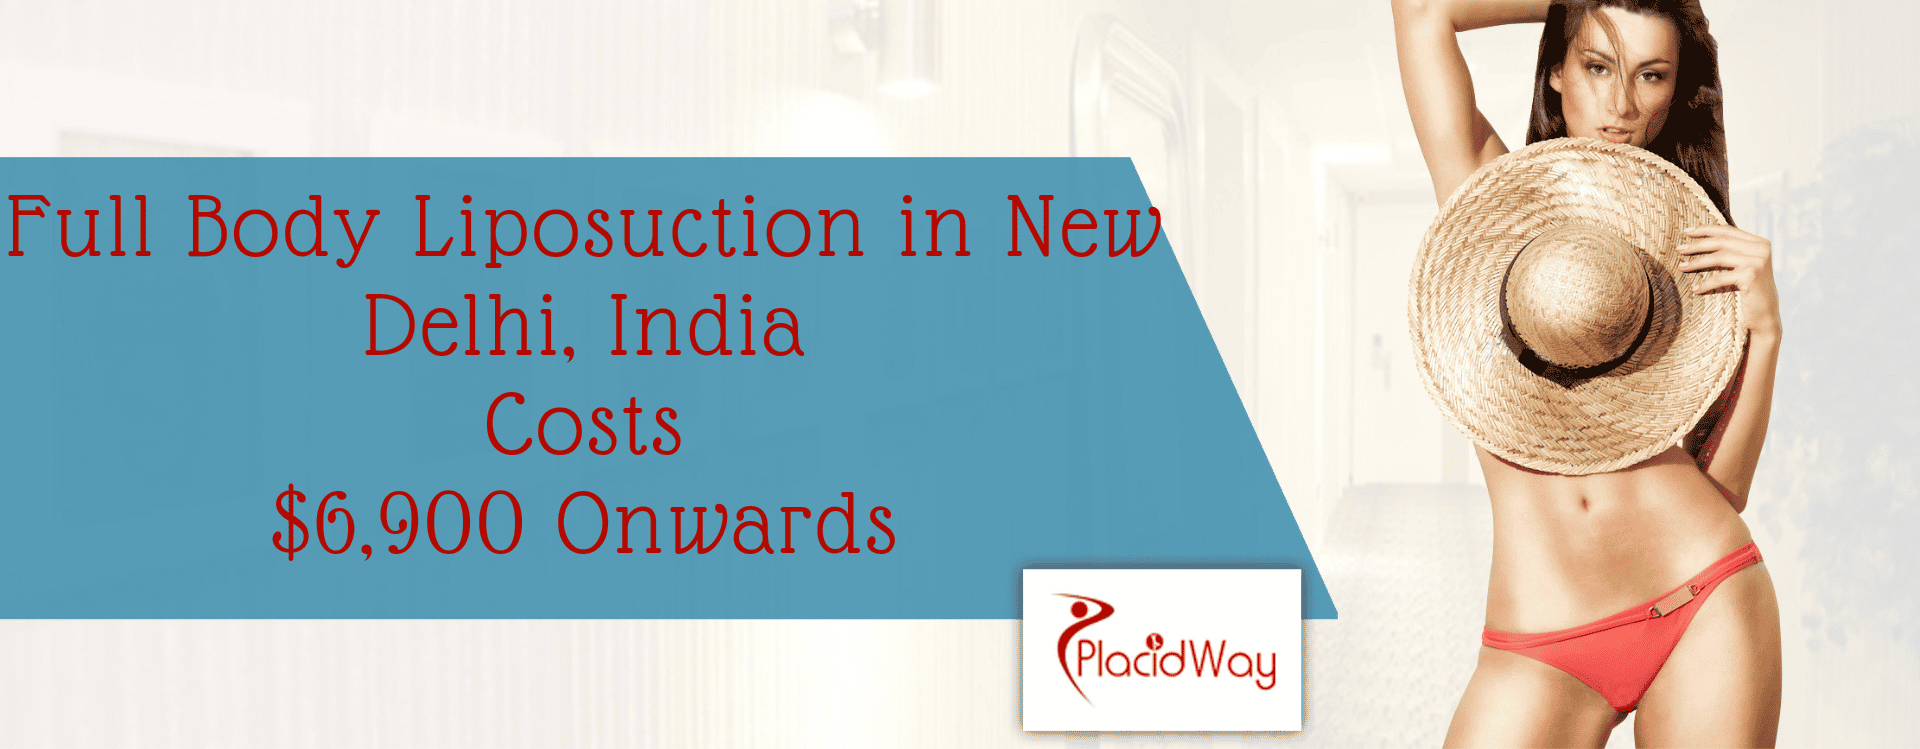 Full Body Liposuction in New Delhi, India